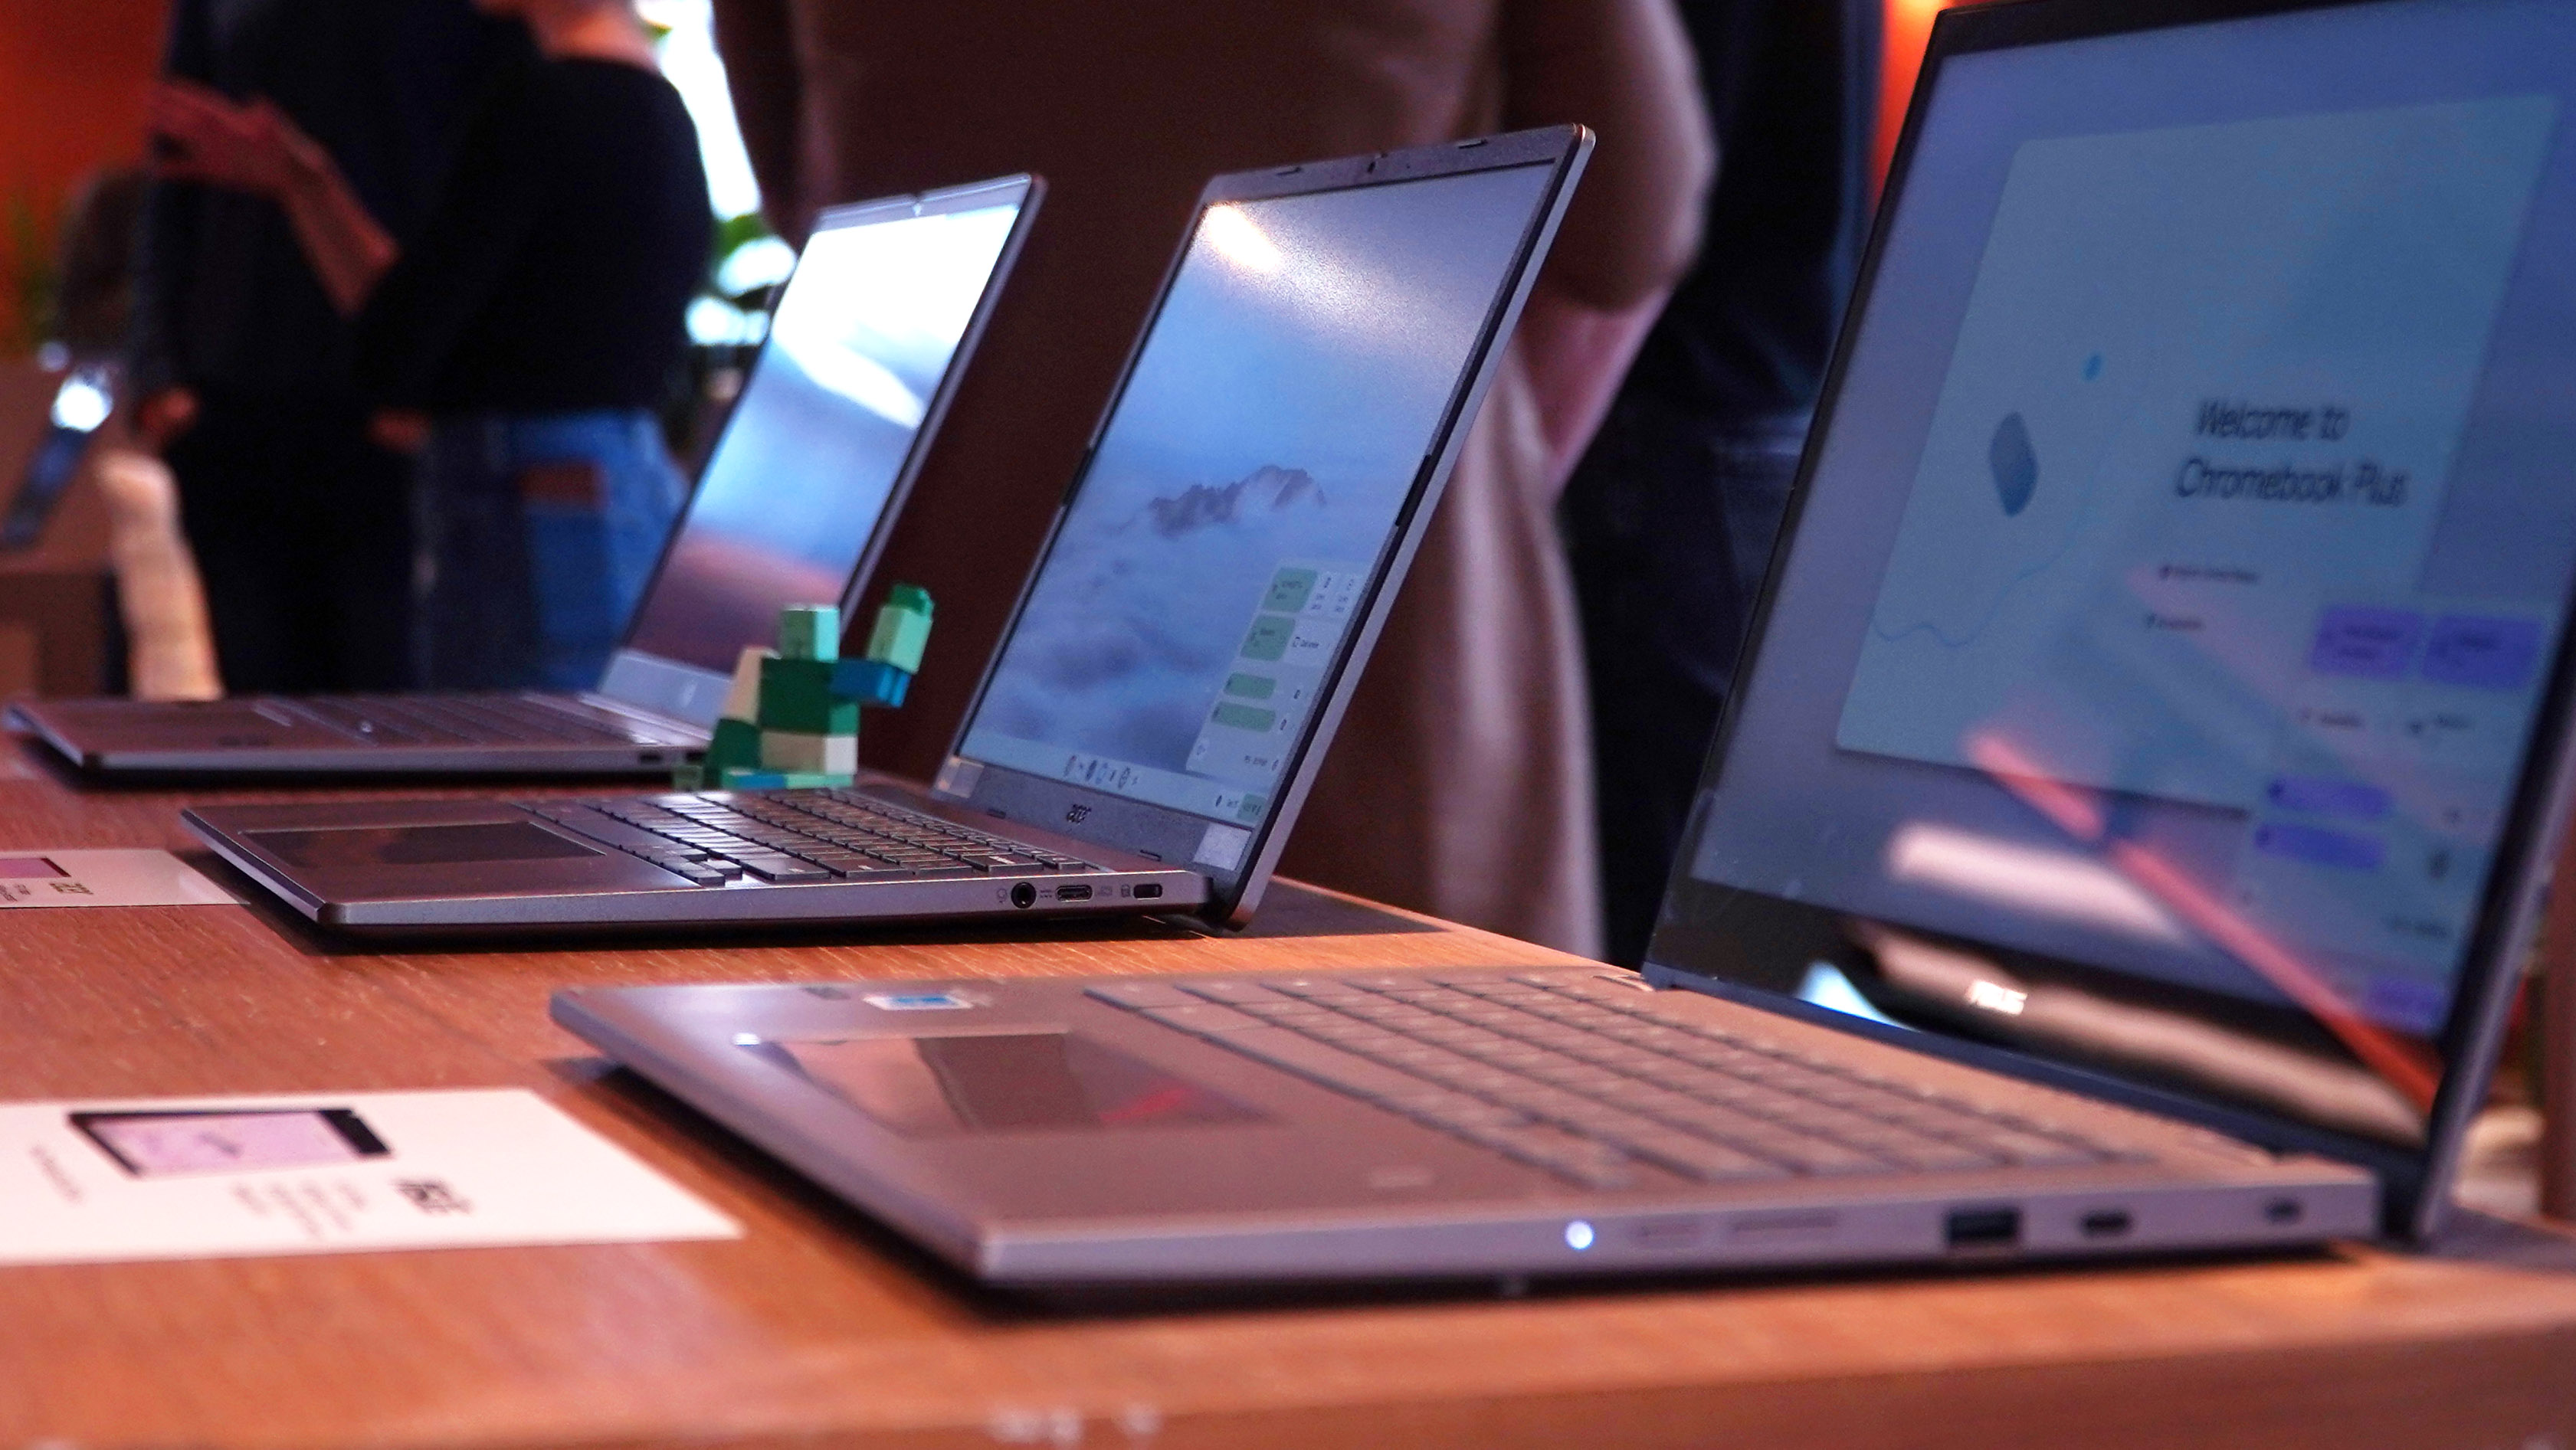 google Chromebook Plus event, three laptops